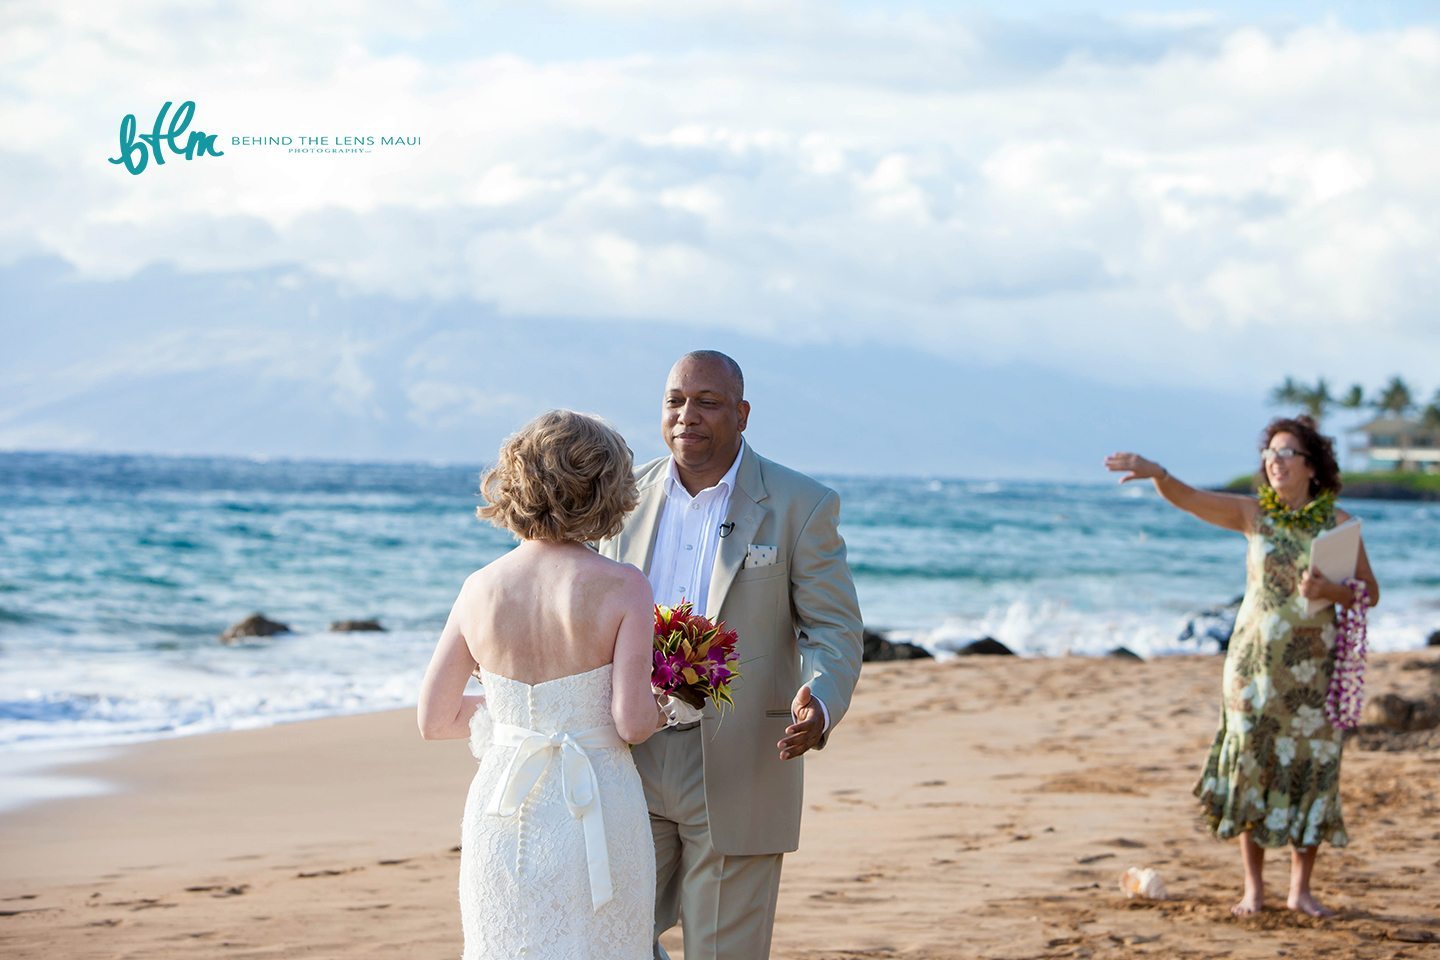 Maui Wedding Photographers 7 _Behind The Lens Maui.jpg